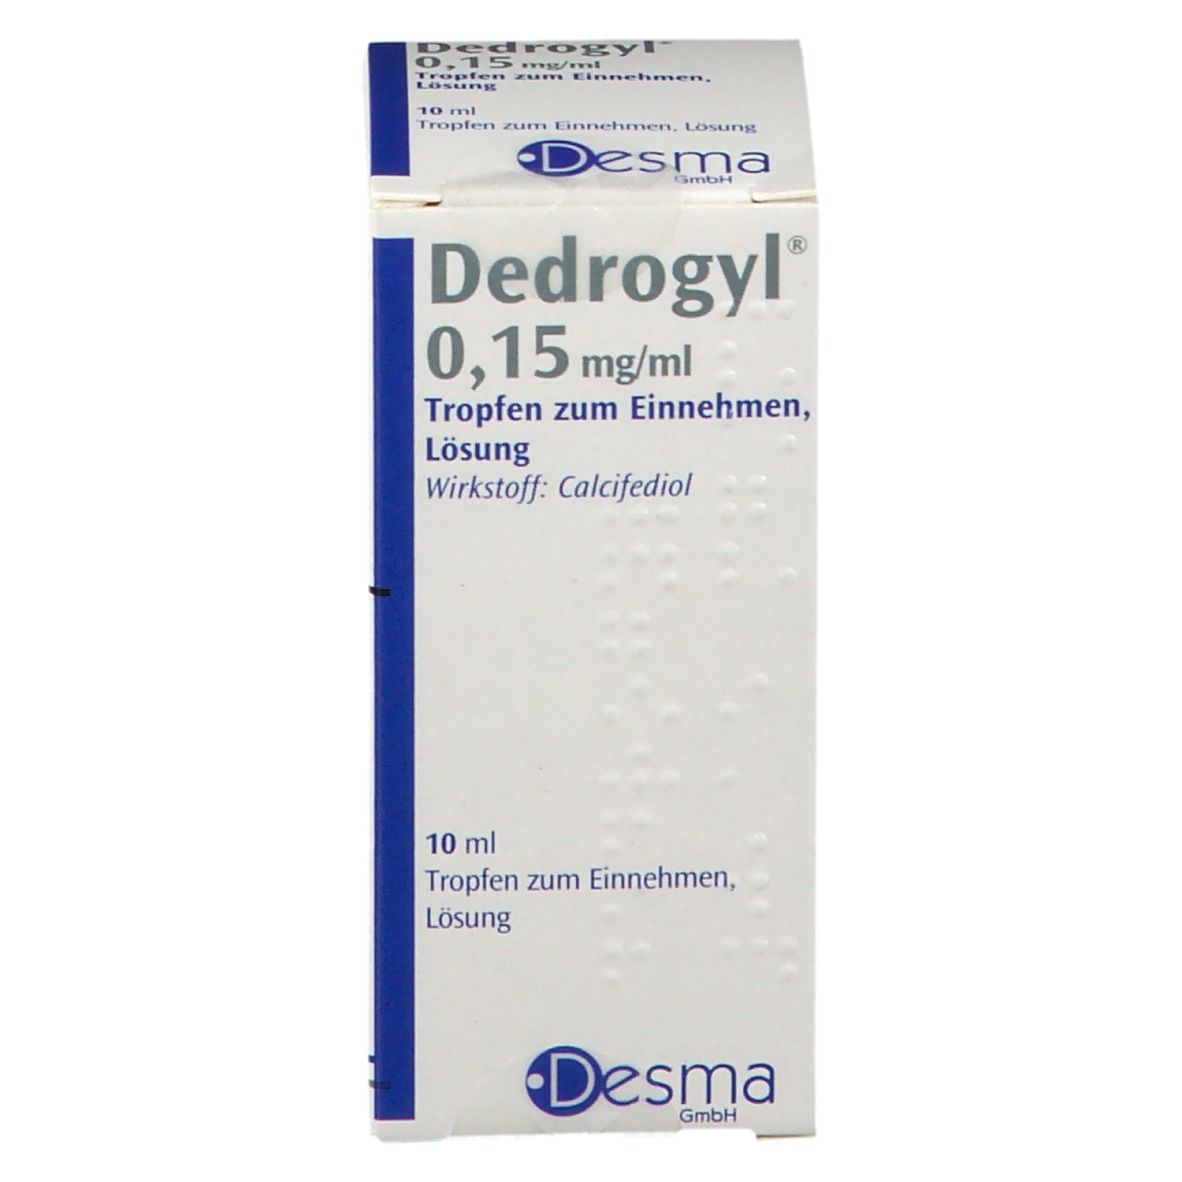 Dedrogyl® 0,15 mg/ml